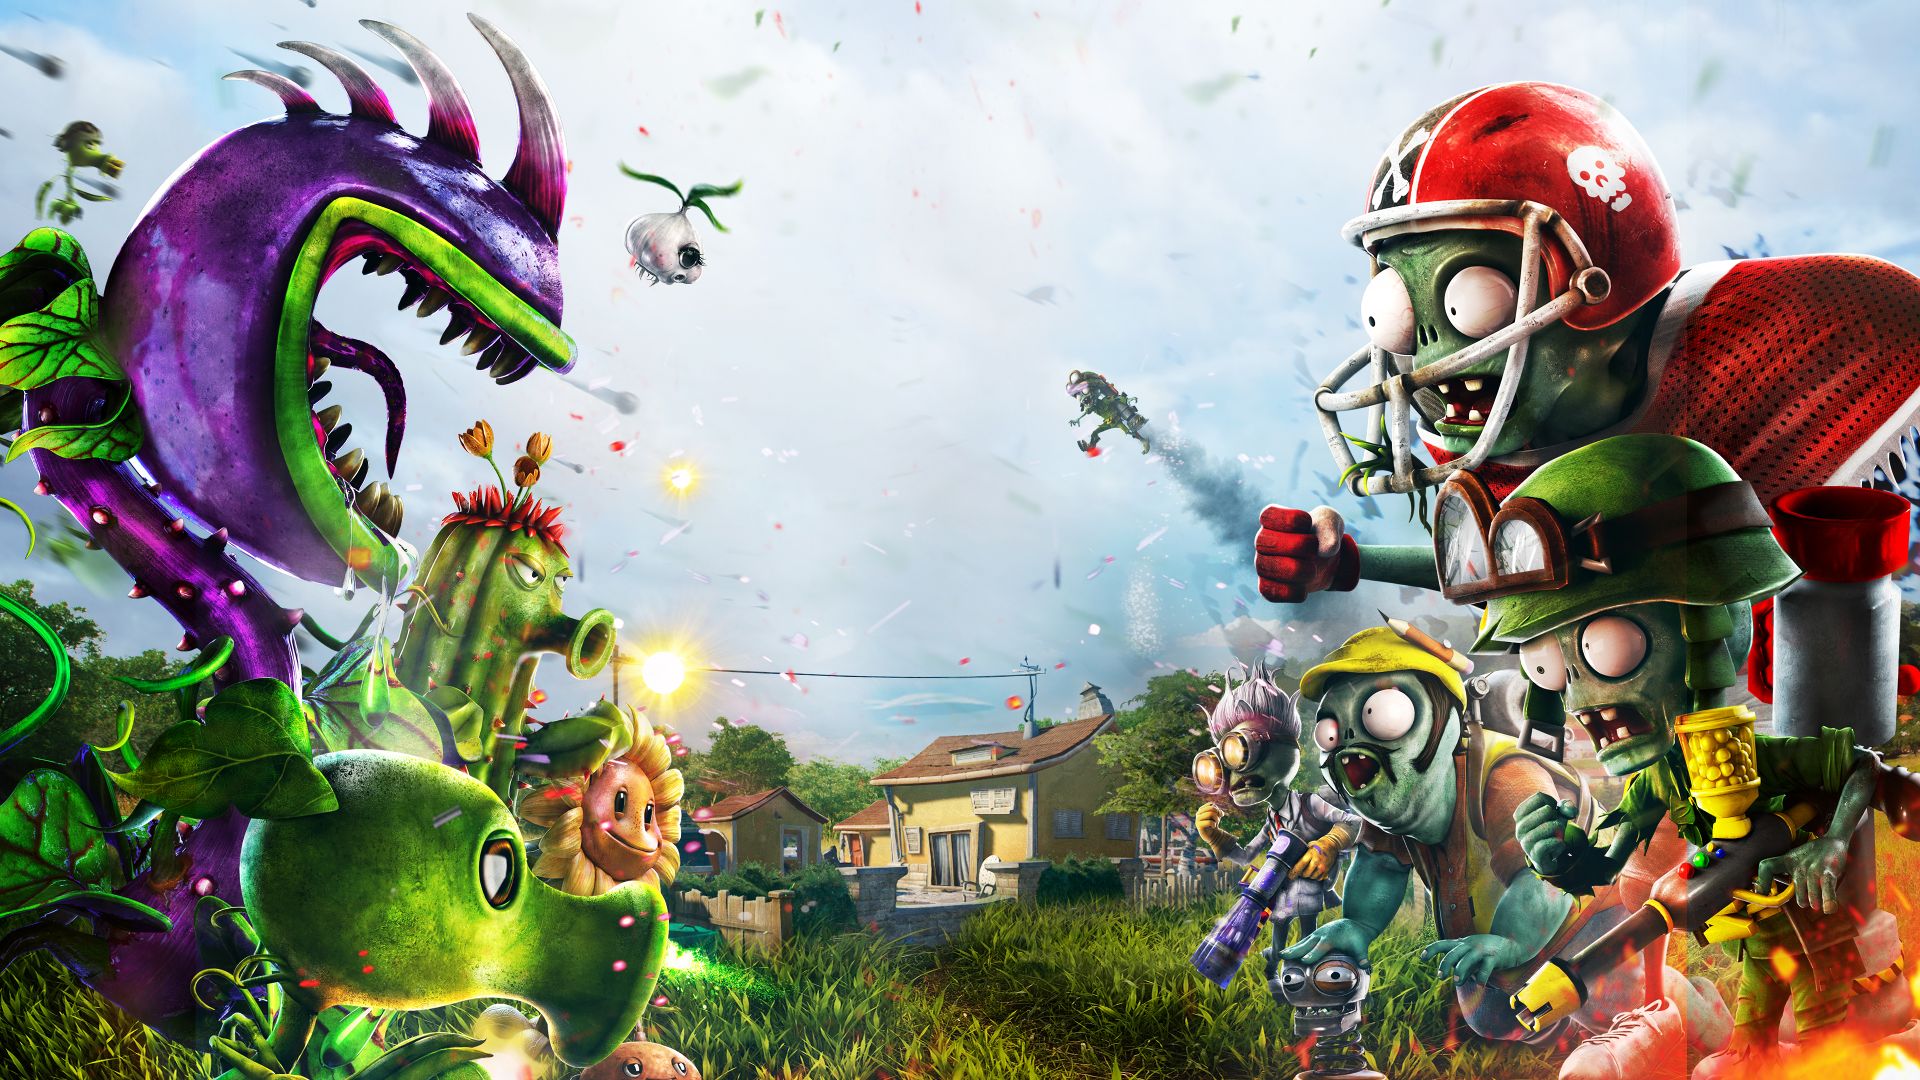 Buy Plants vs. Zombies Garden Warfare 2, PC - EA Origin